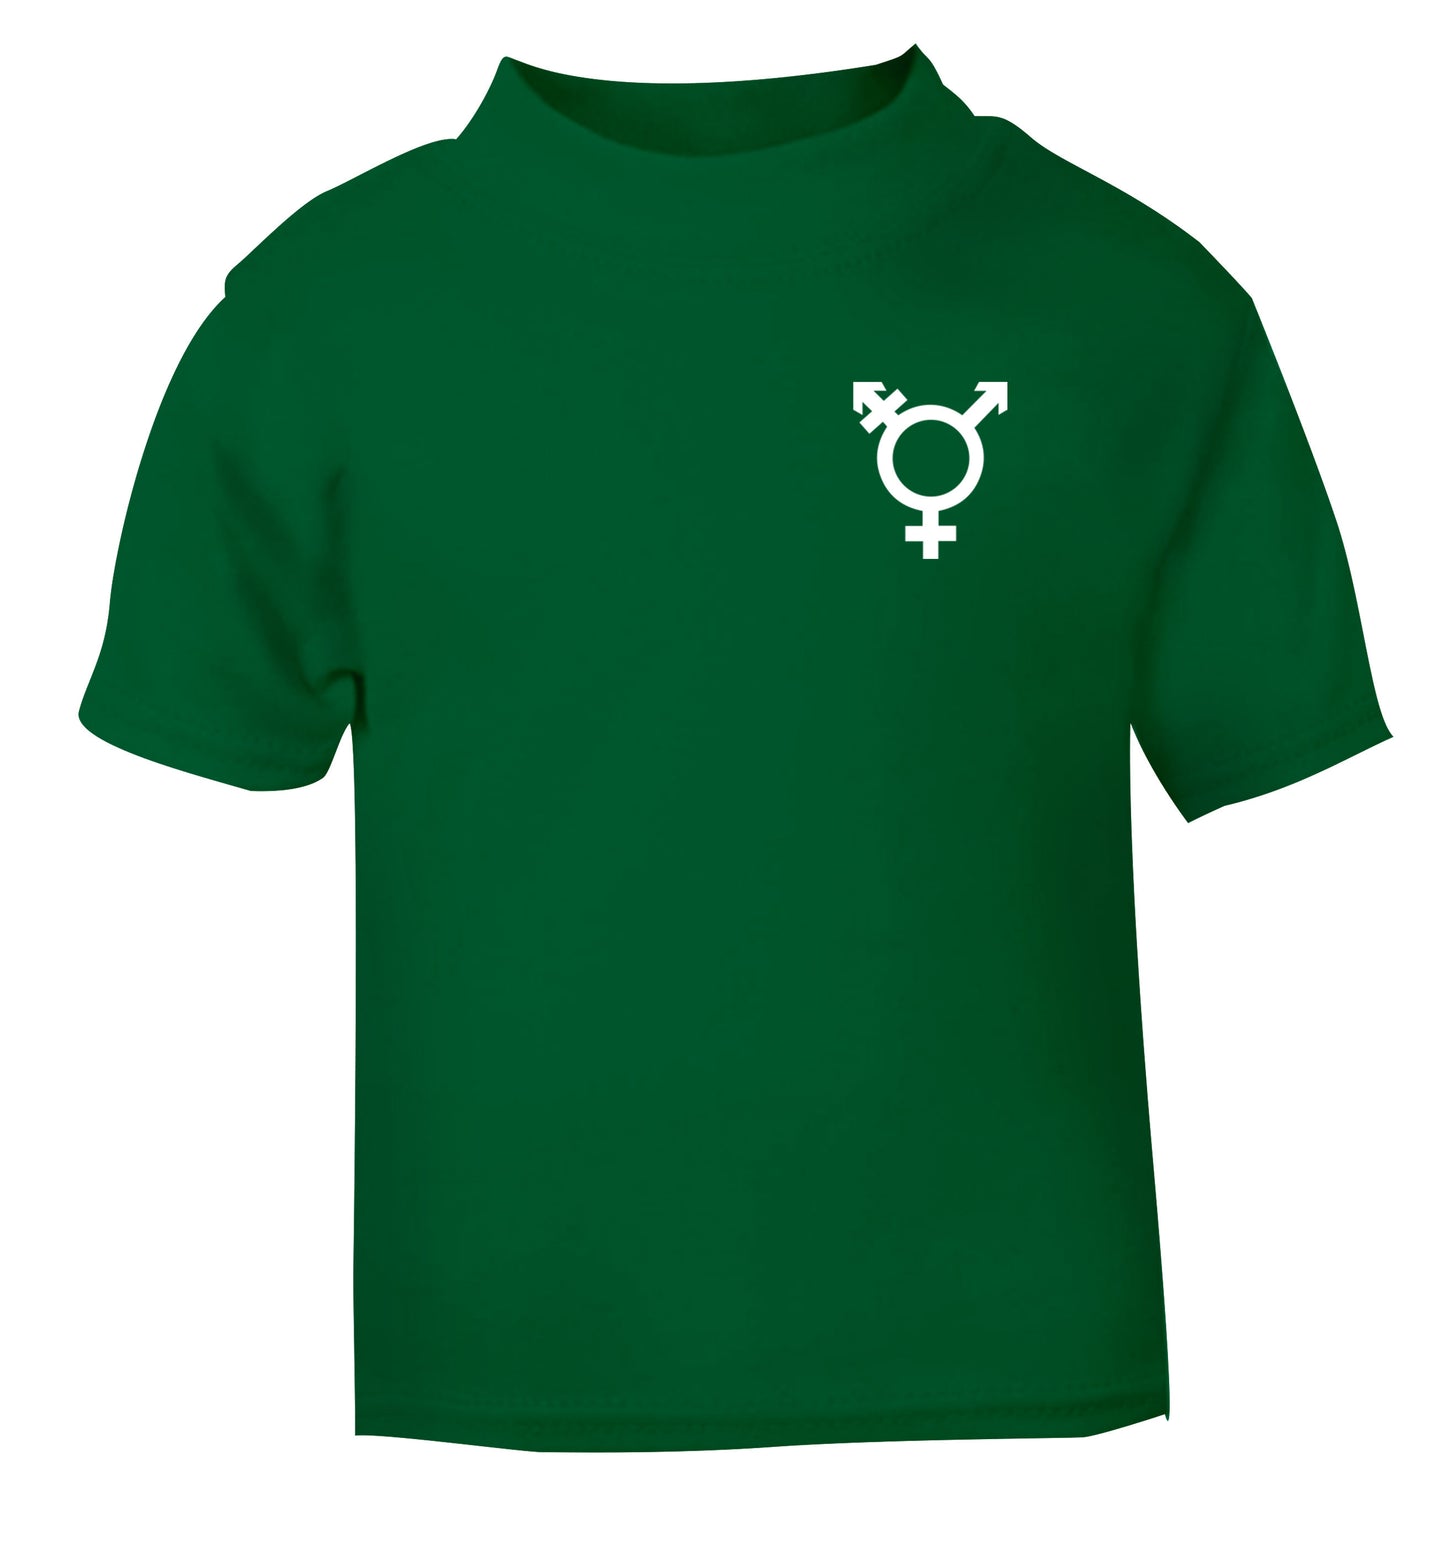 Trans gender symbol pocket green Baby Toddler Tshirt 2 Years